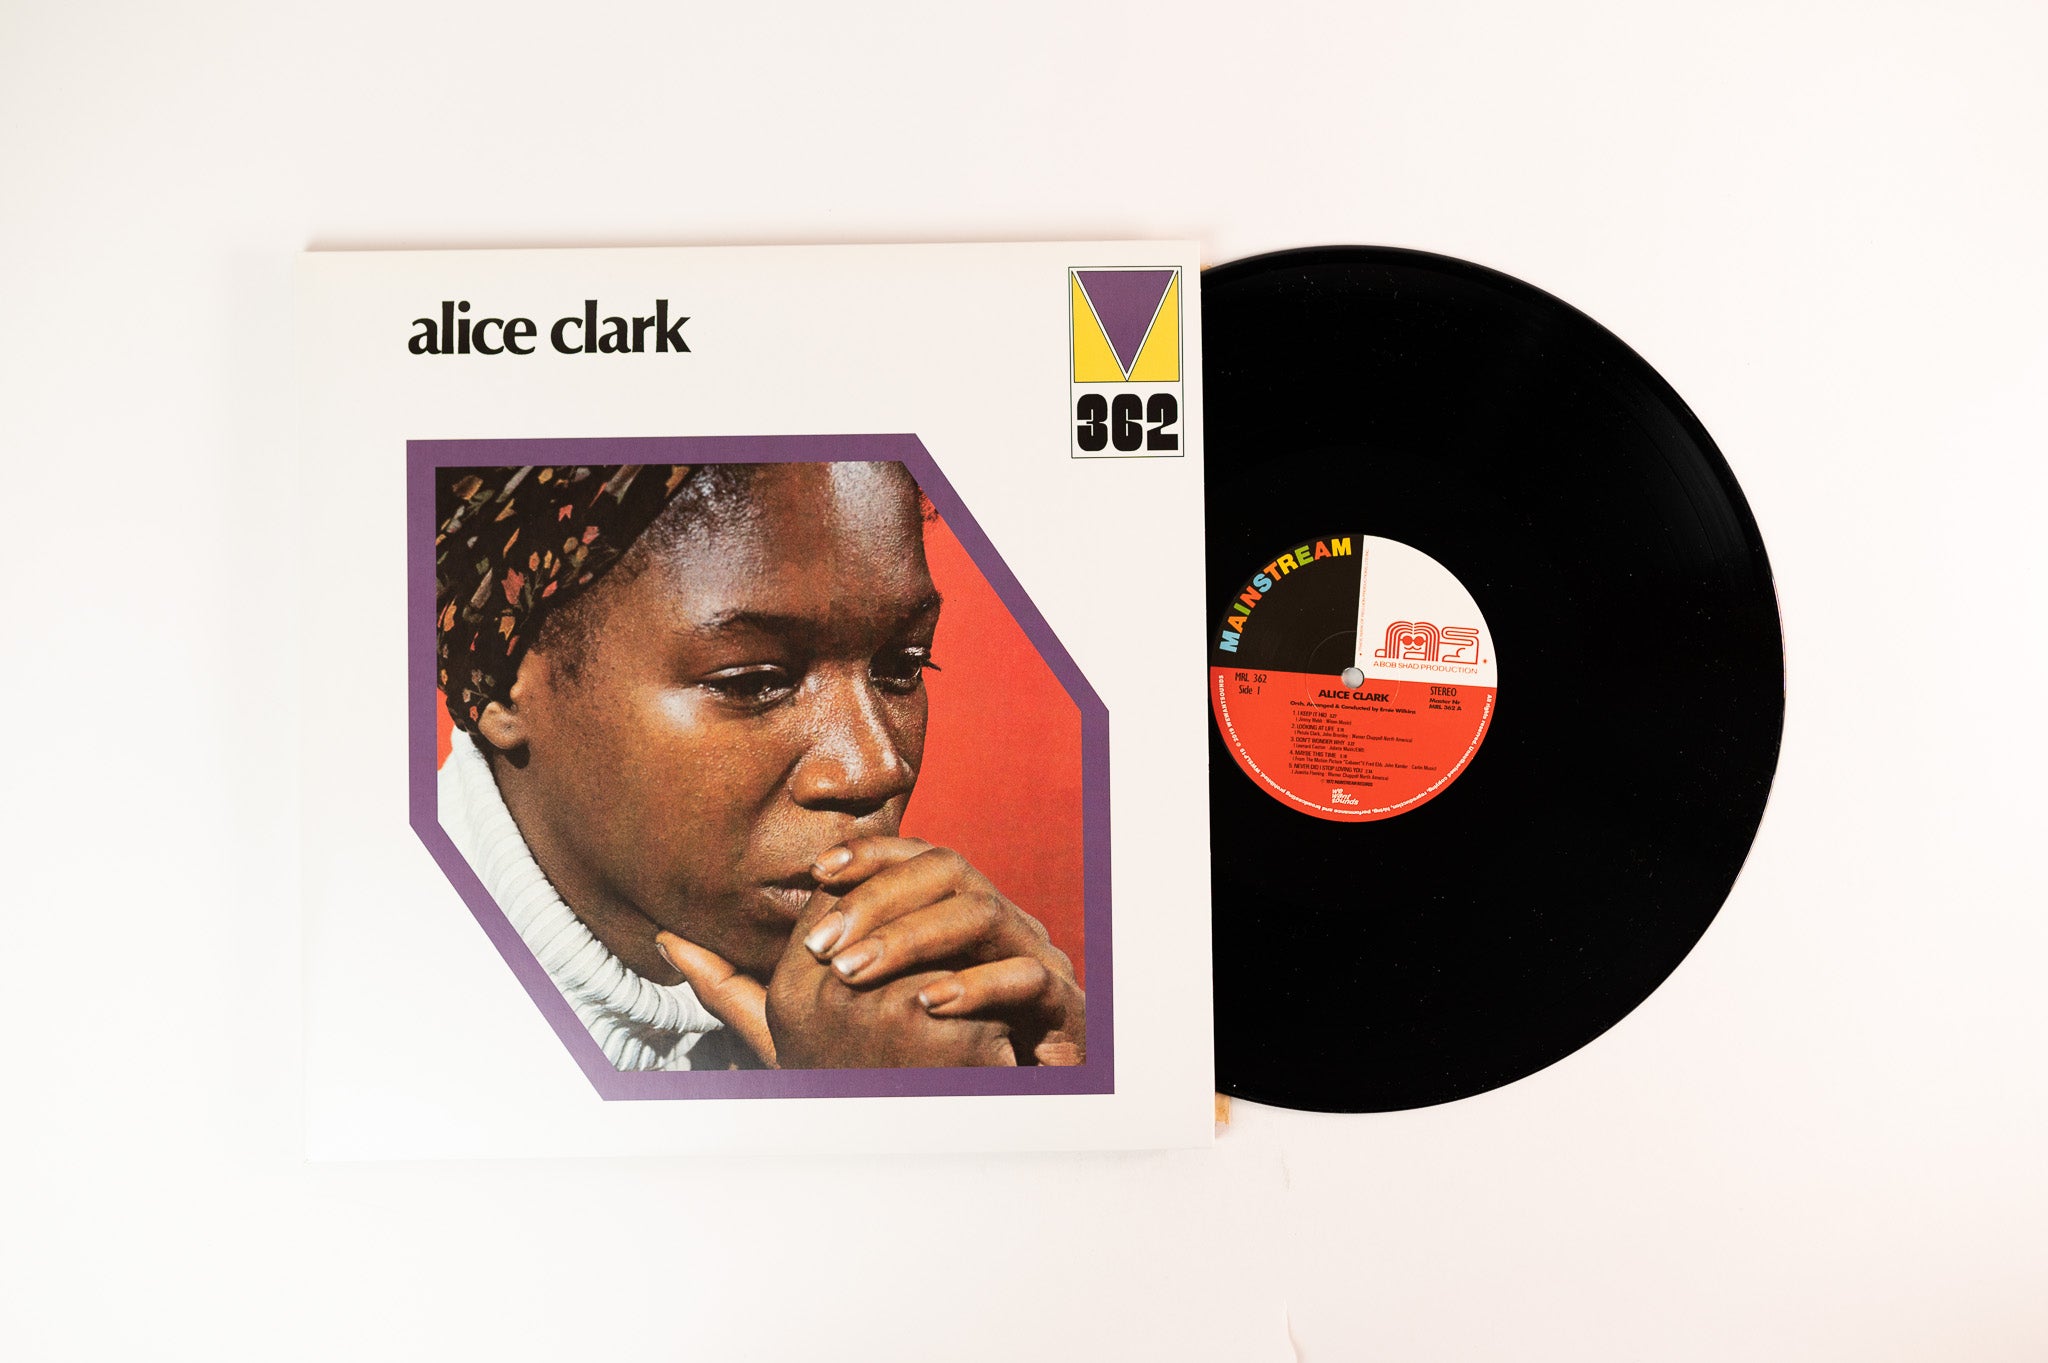 Alice Clark - Alice Clark on Mainstream Wewantsounds Deluxe Edition Reissue